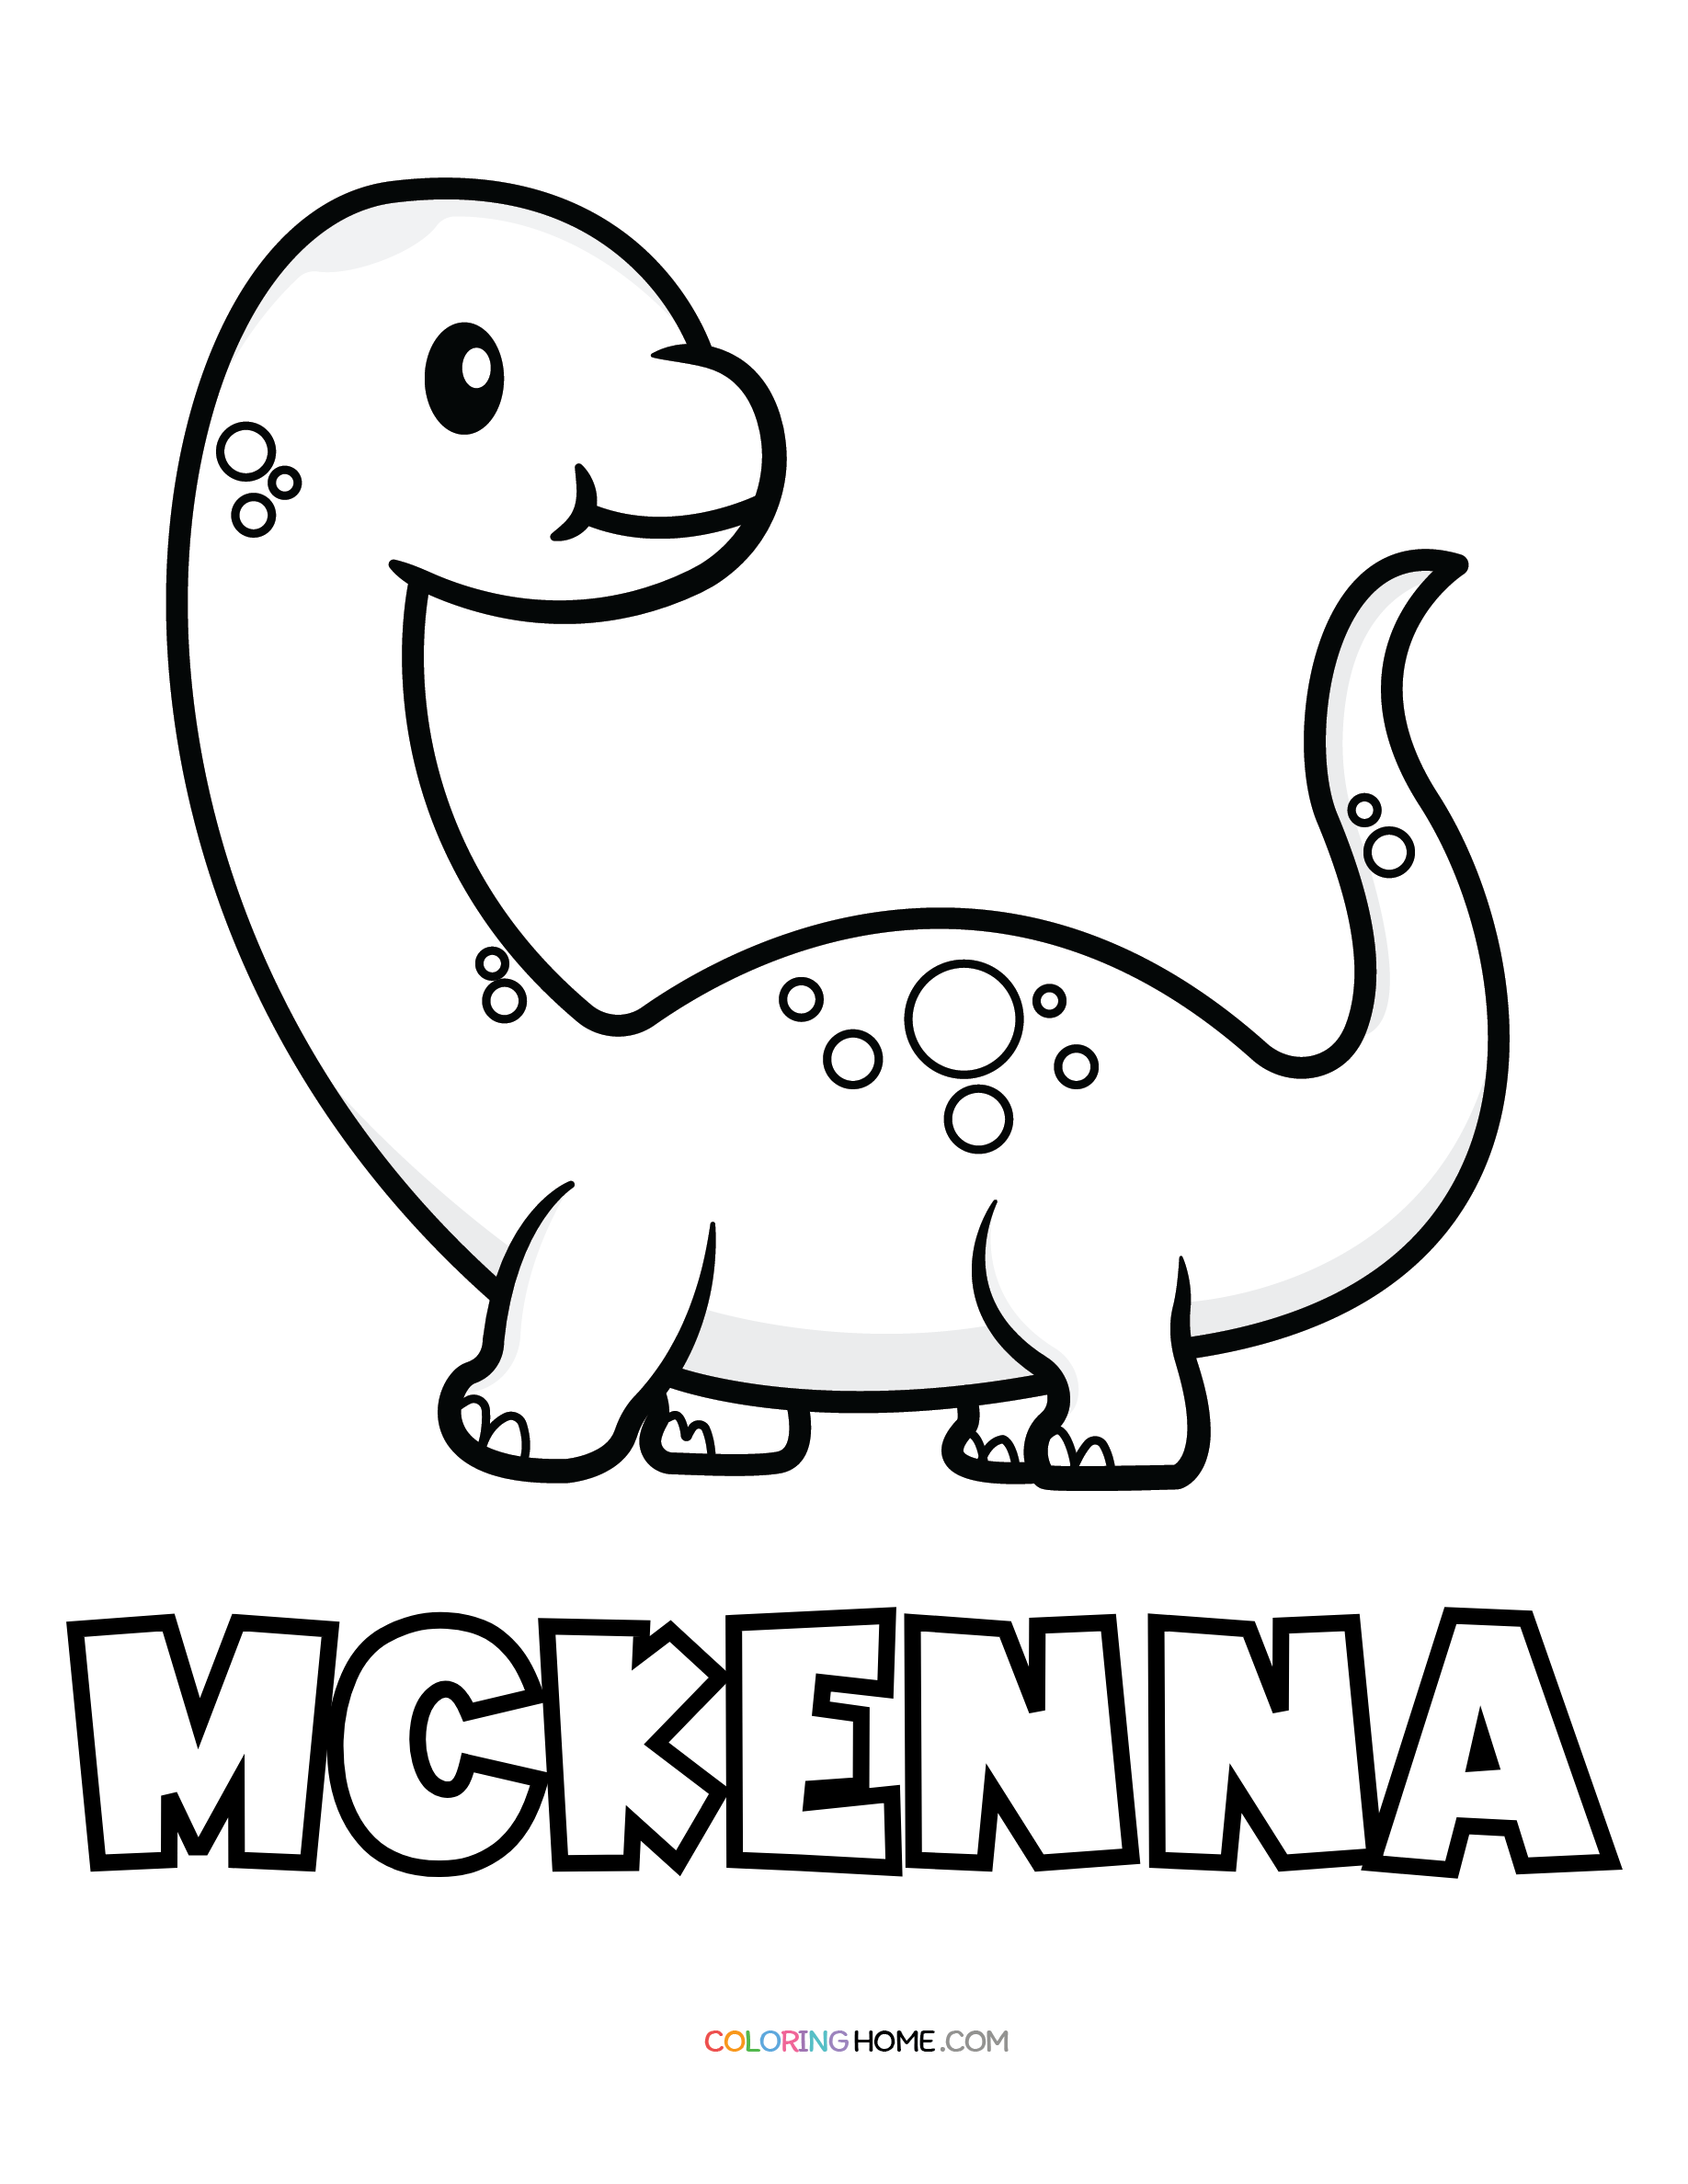 Mckenna dinosaur coloring page